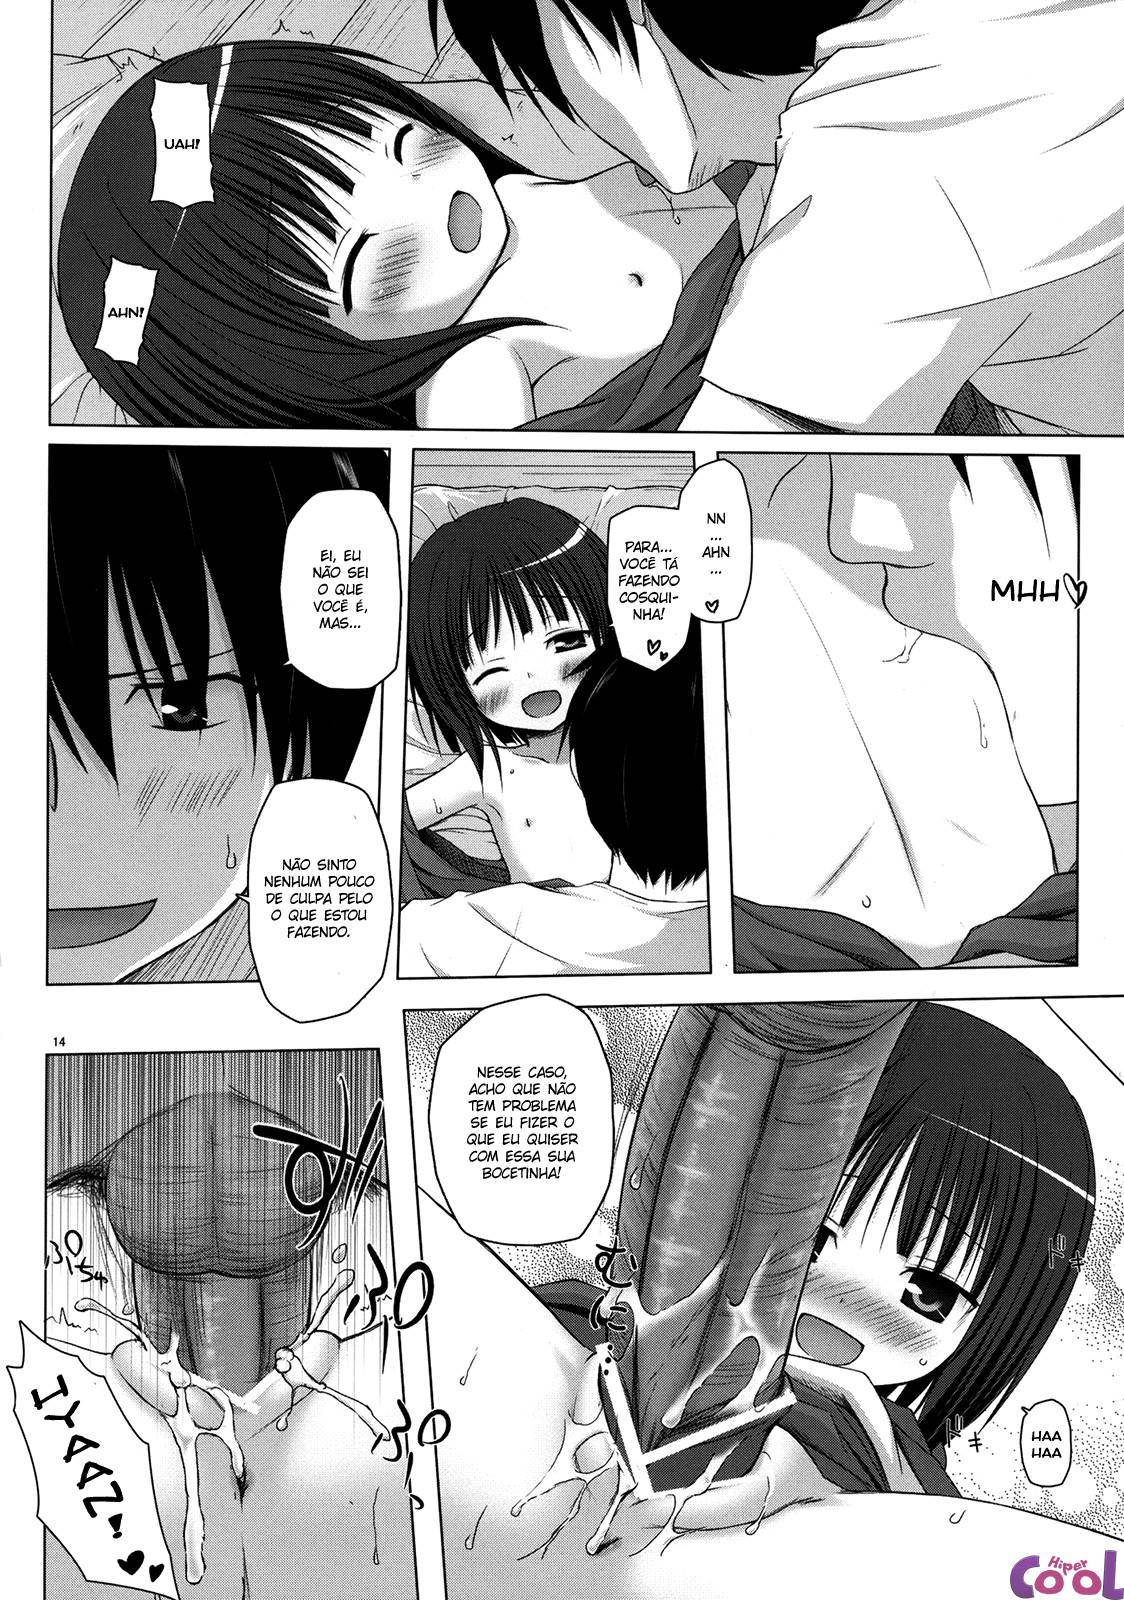 monokemono-shoya-chapter-01-page-13.jpg